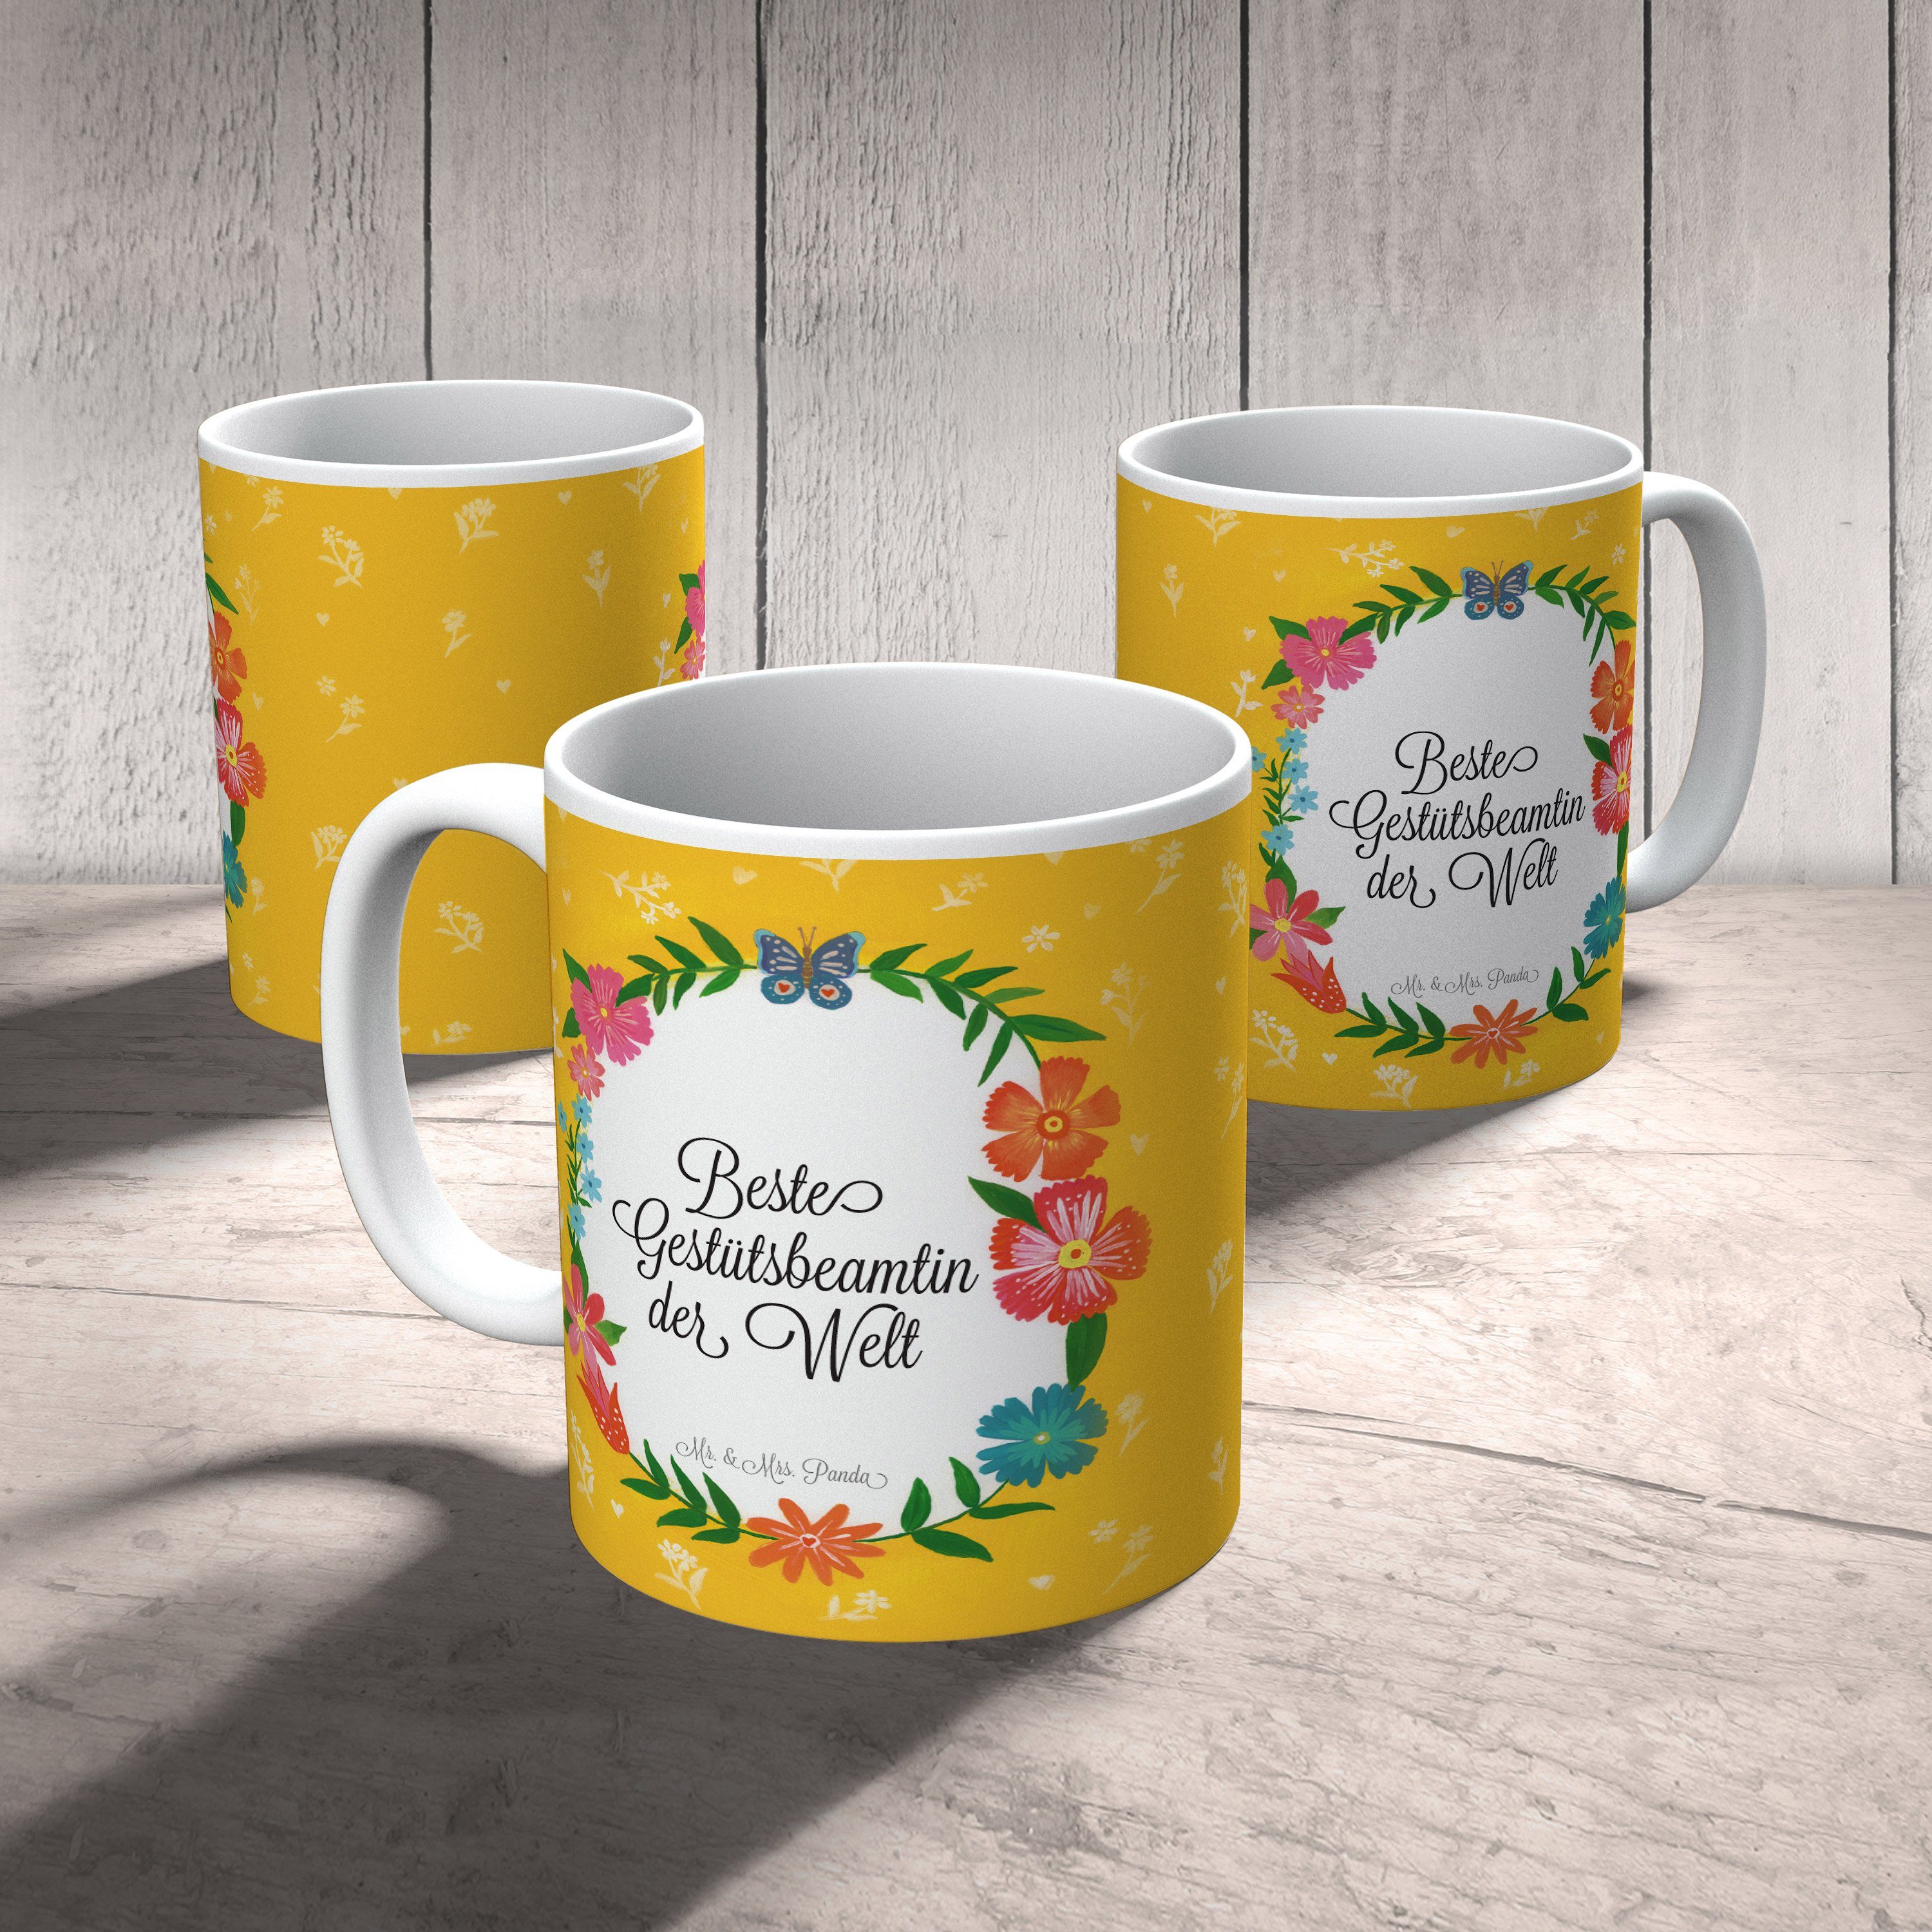 Mr. & Mrs. - Bachelor, Geschenk, Rente, Motive, Keramik Tasse Tasse Gestütsbeamtin Kaffeetasse, Panda